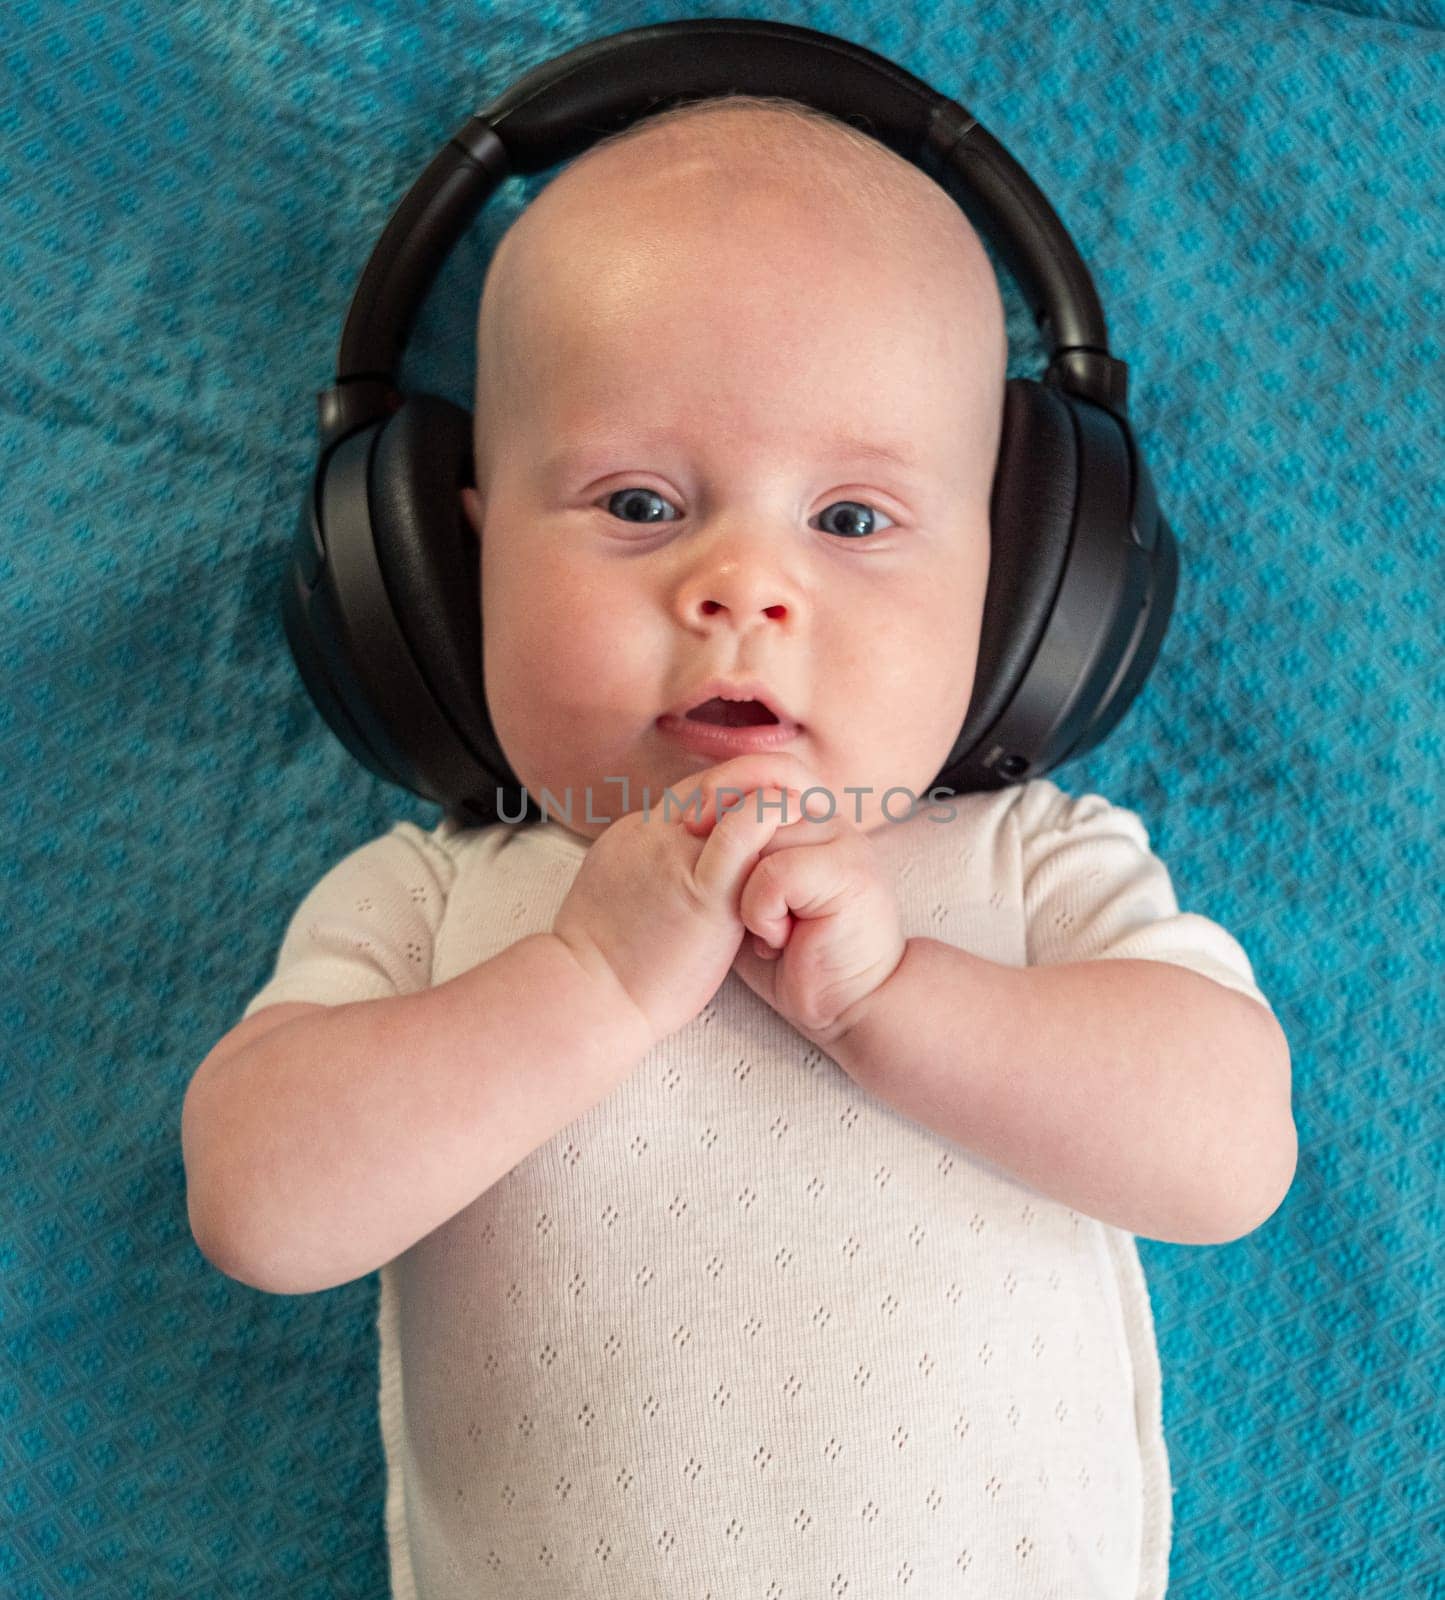 Little boy on blue blanket background with black wireless headphones by Busker